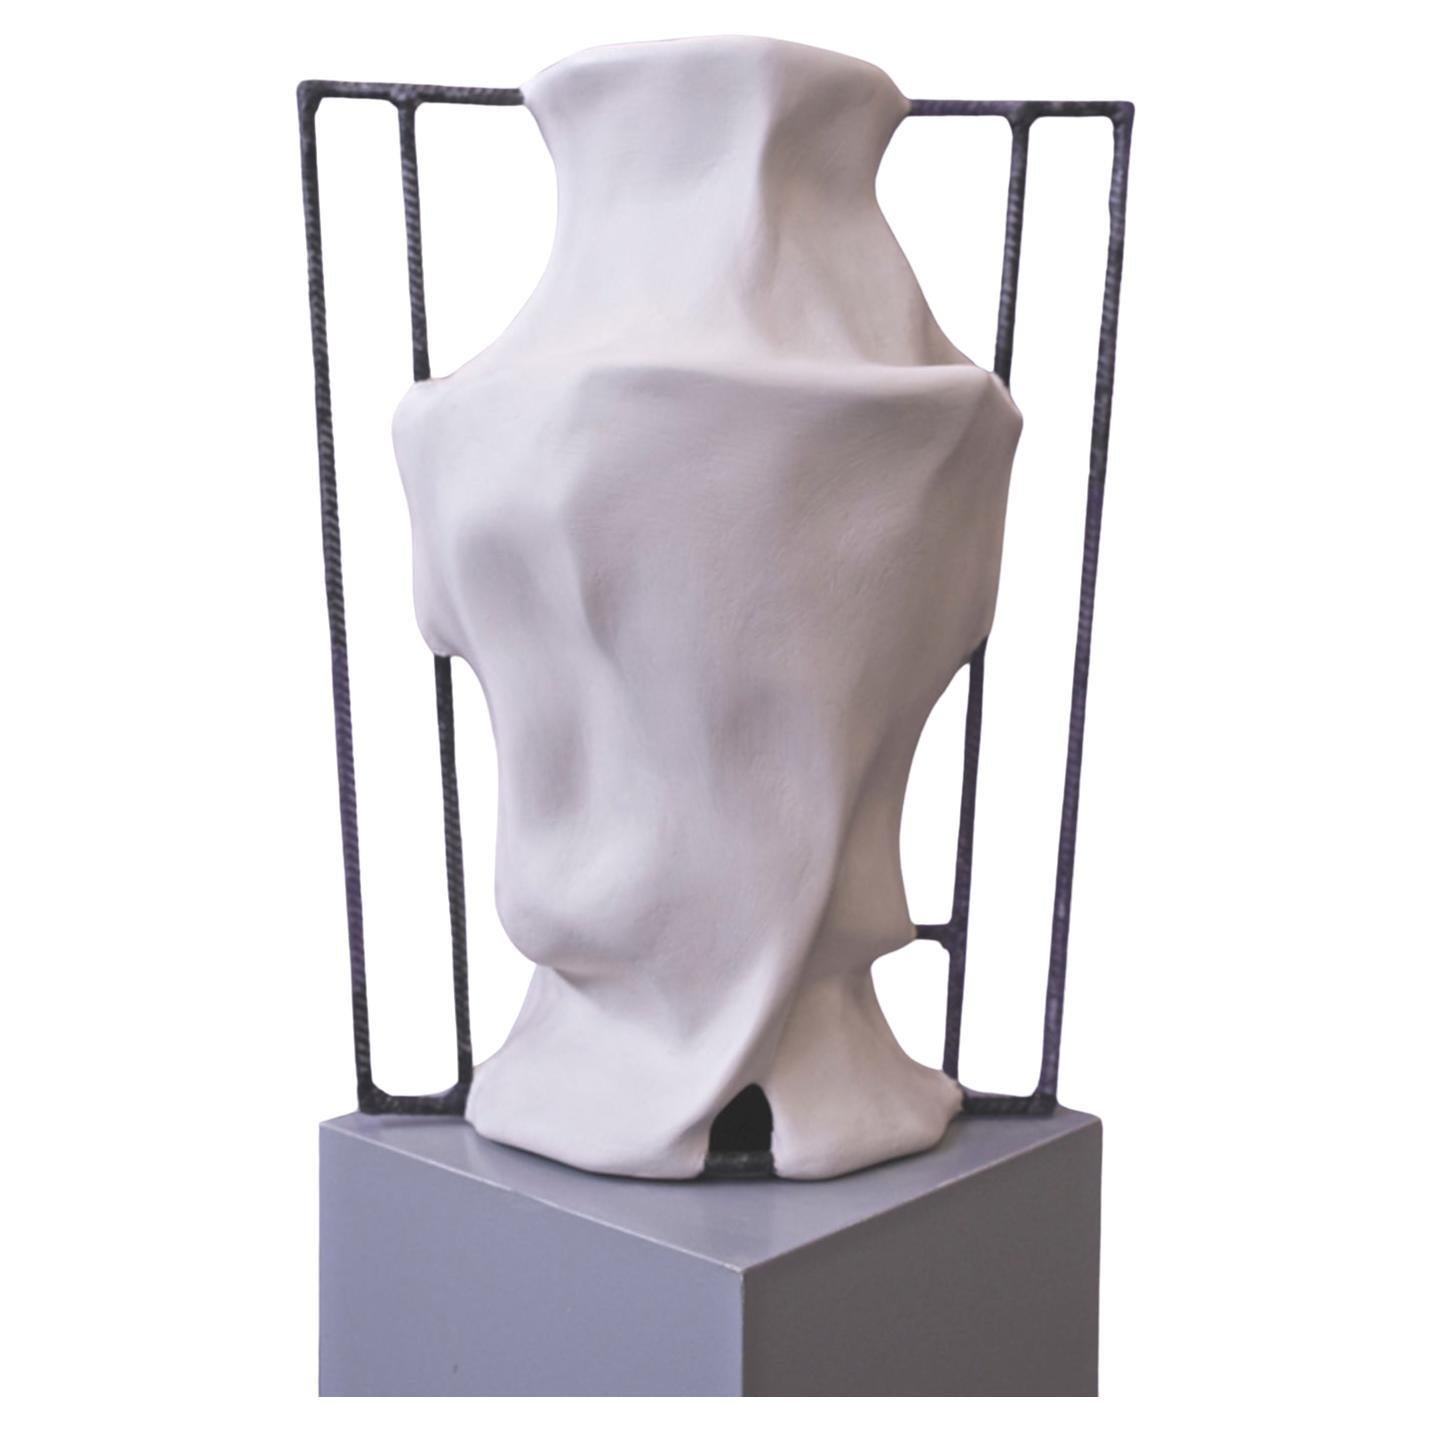  ReConstruction Vase II New Moves by Jordan Artisan  For Sale